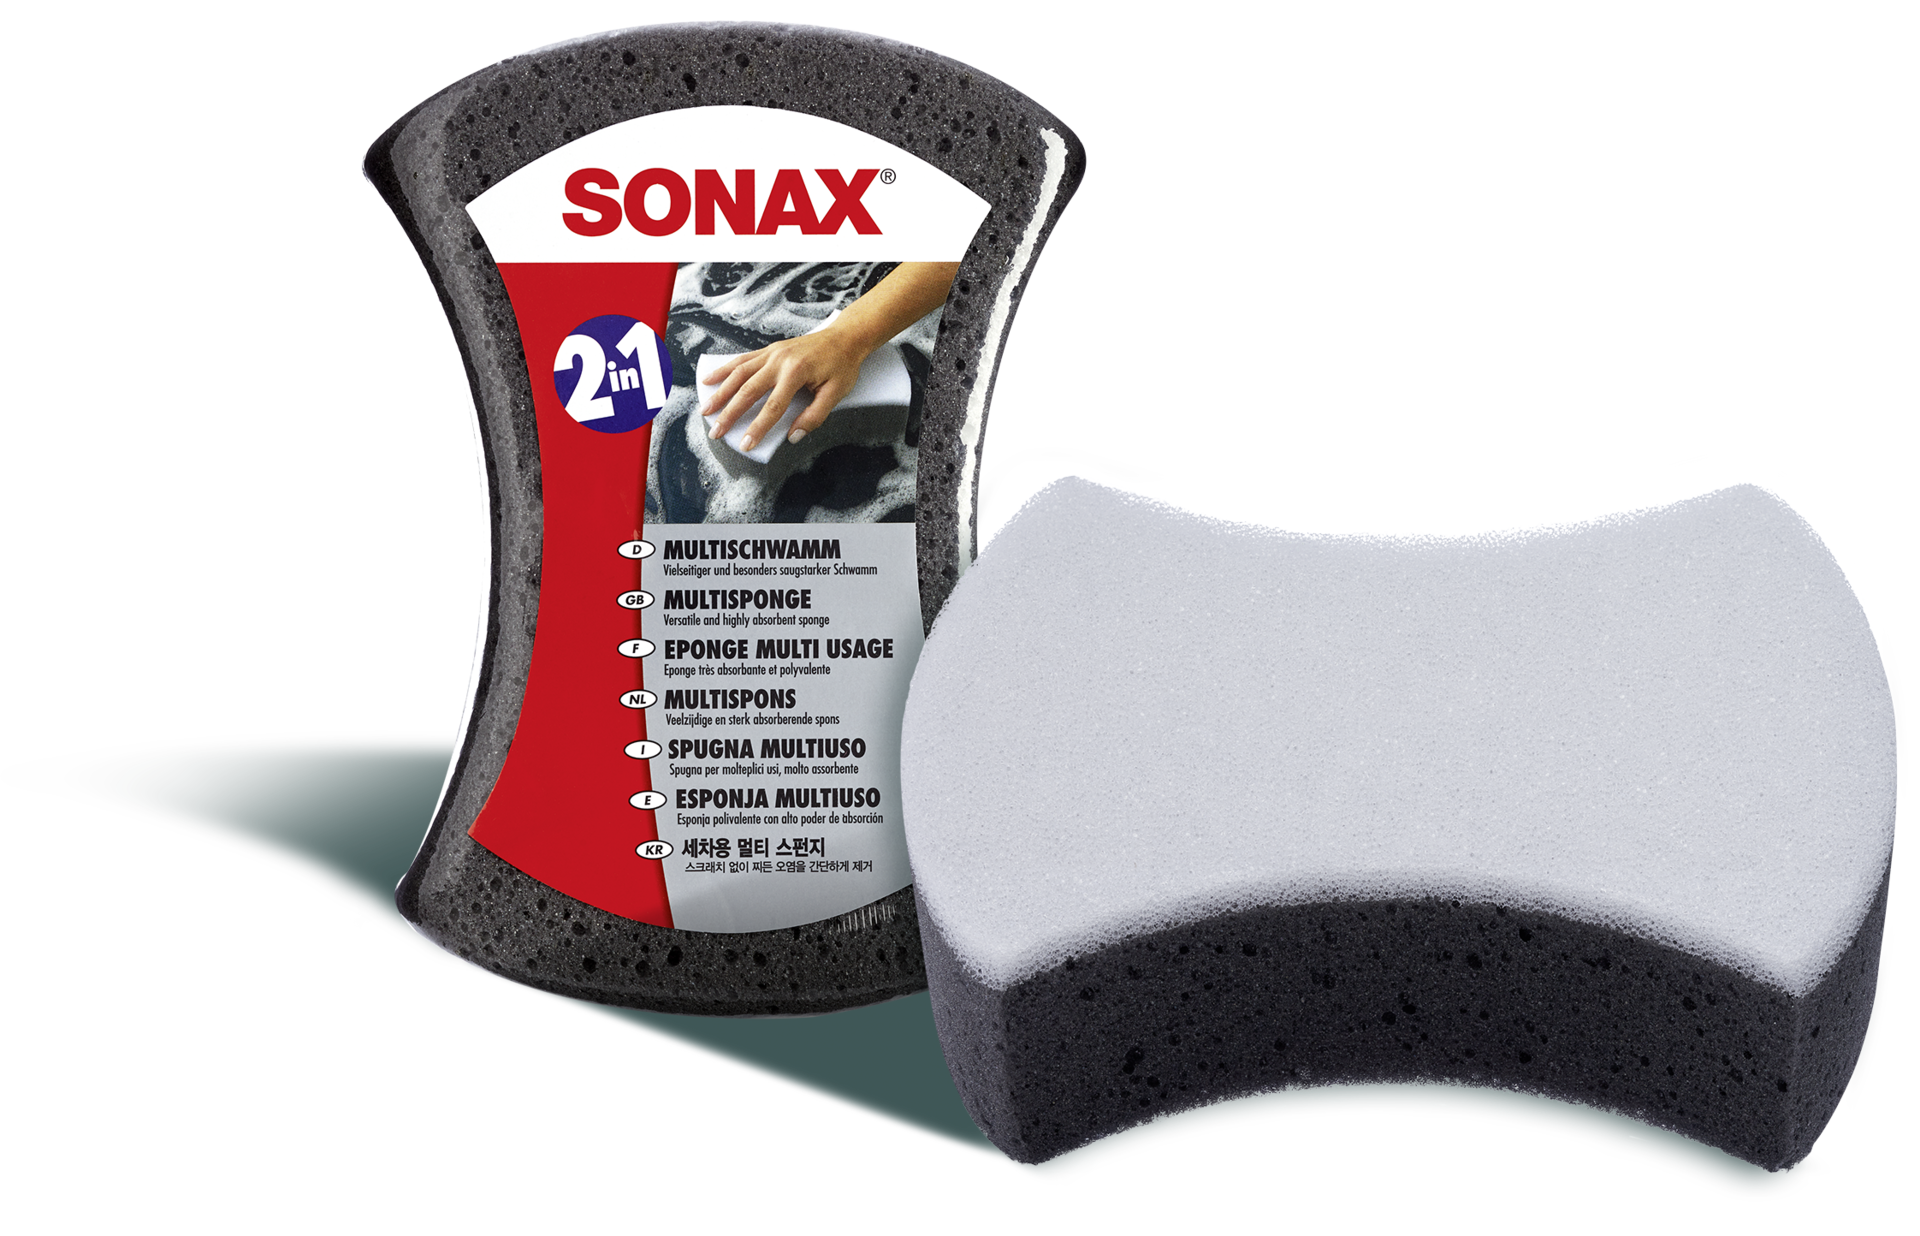 Sonax Multi-/insectenspons